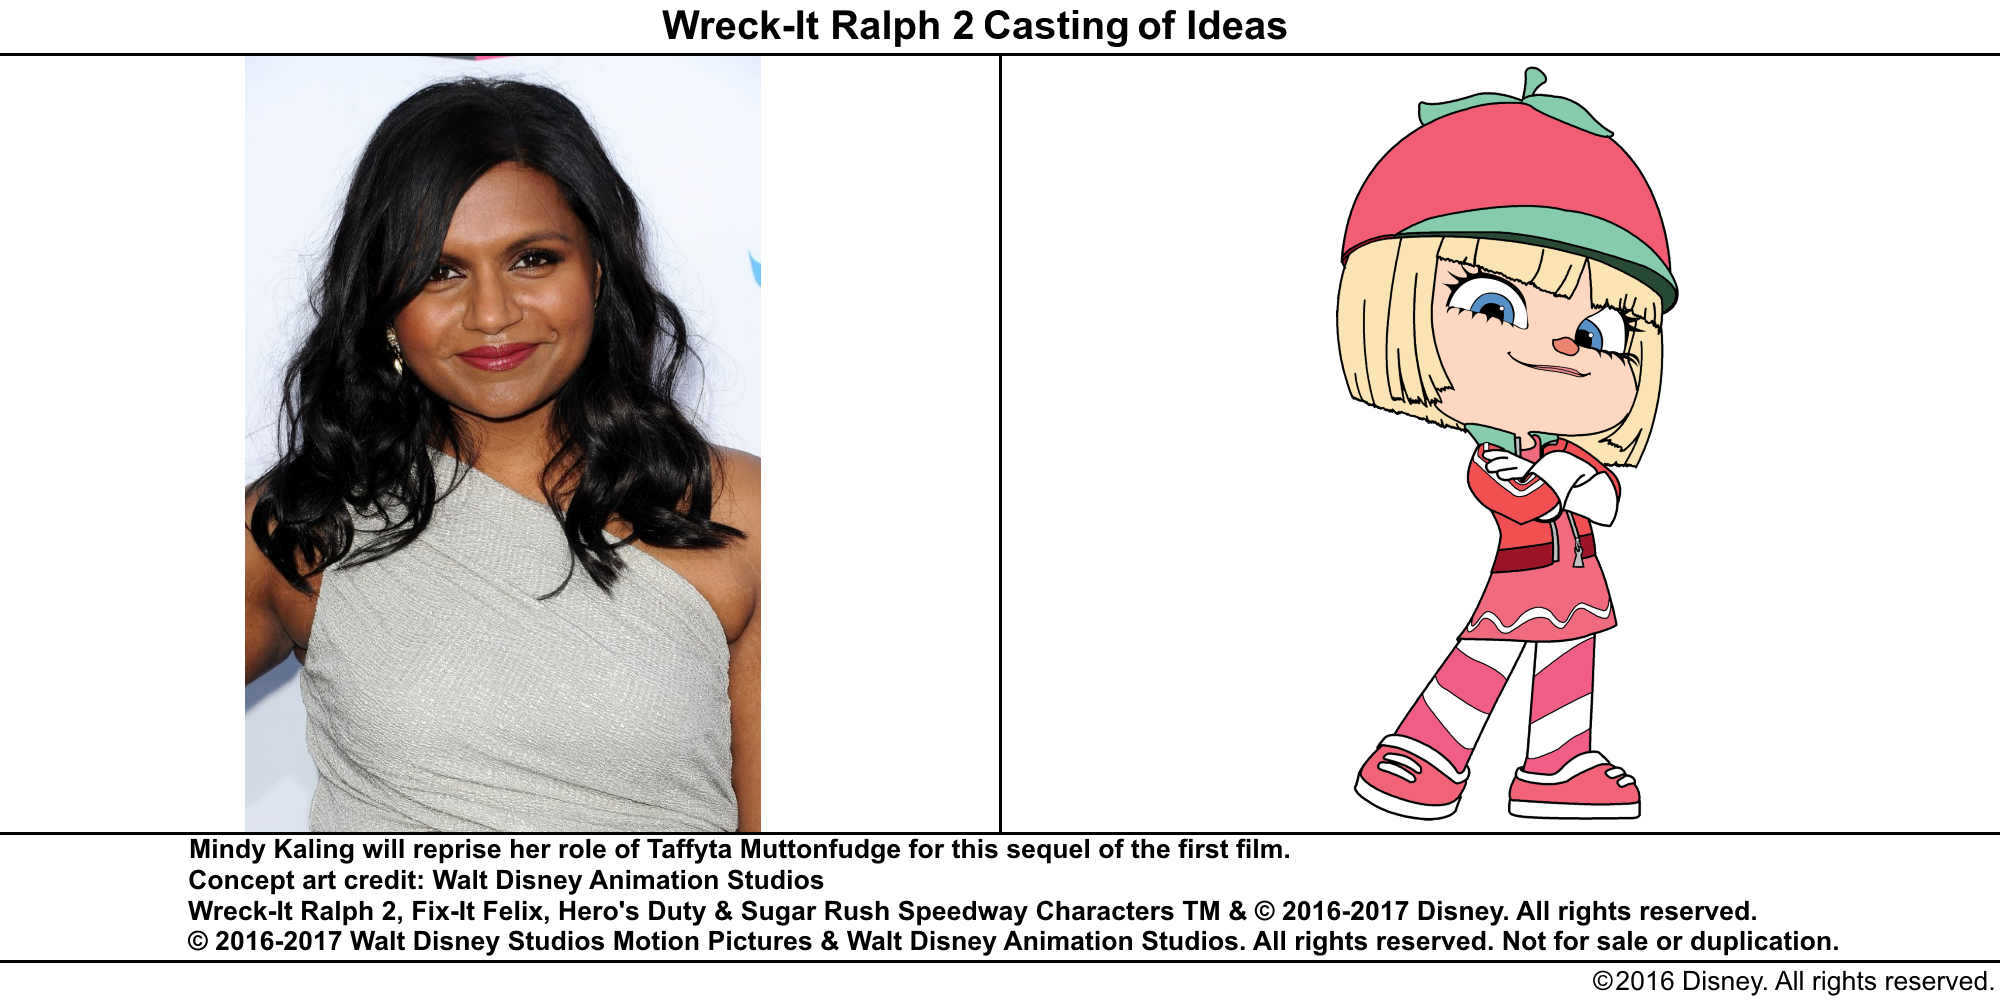 Wreck-It Ralph 2 Casting of Ideas: Mindy Kaling